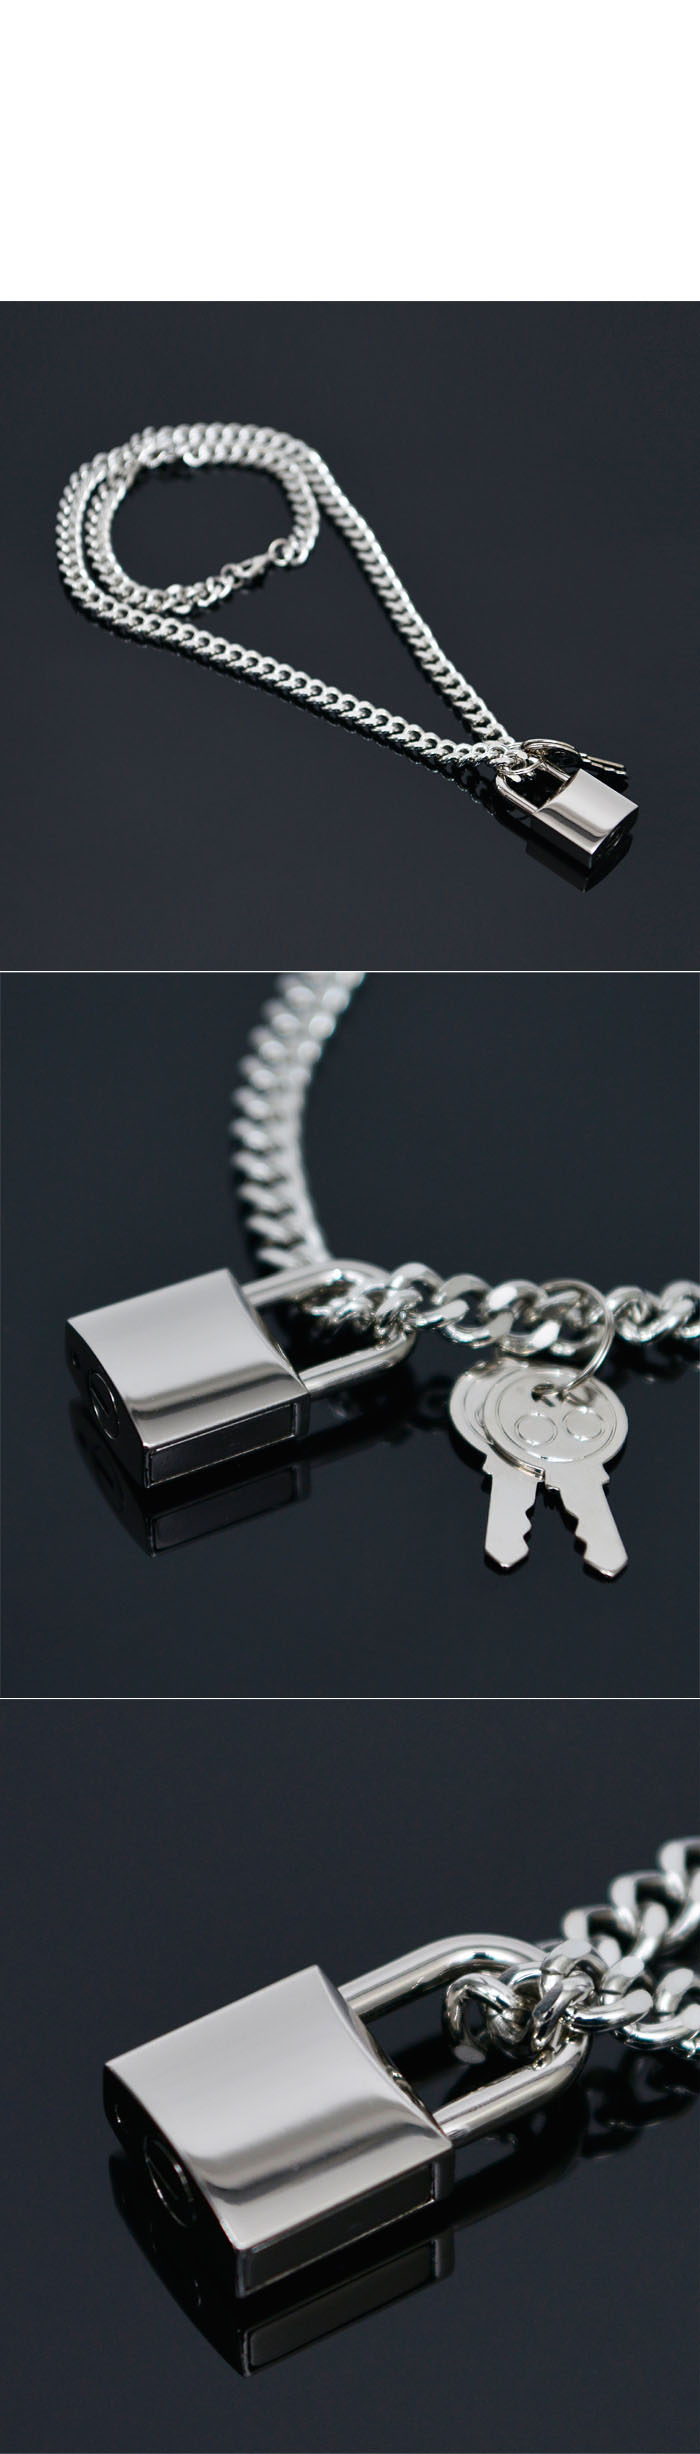 Accessories :: Necklaces :: Real Lock & Key Pendant Silver Long-Necklace 279 - GUYLOOK Men's ...